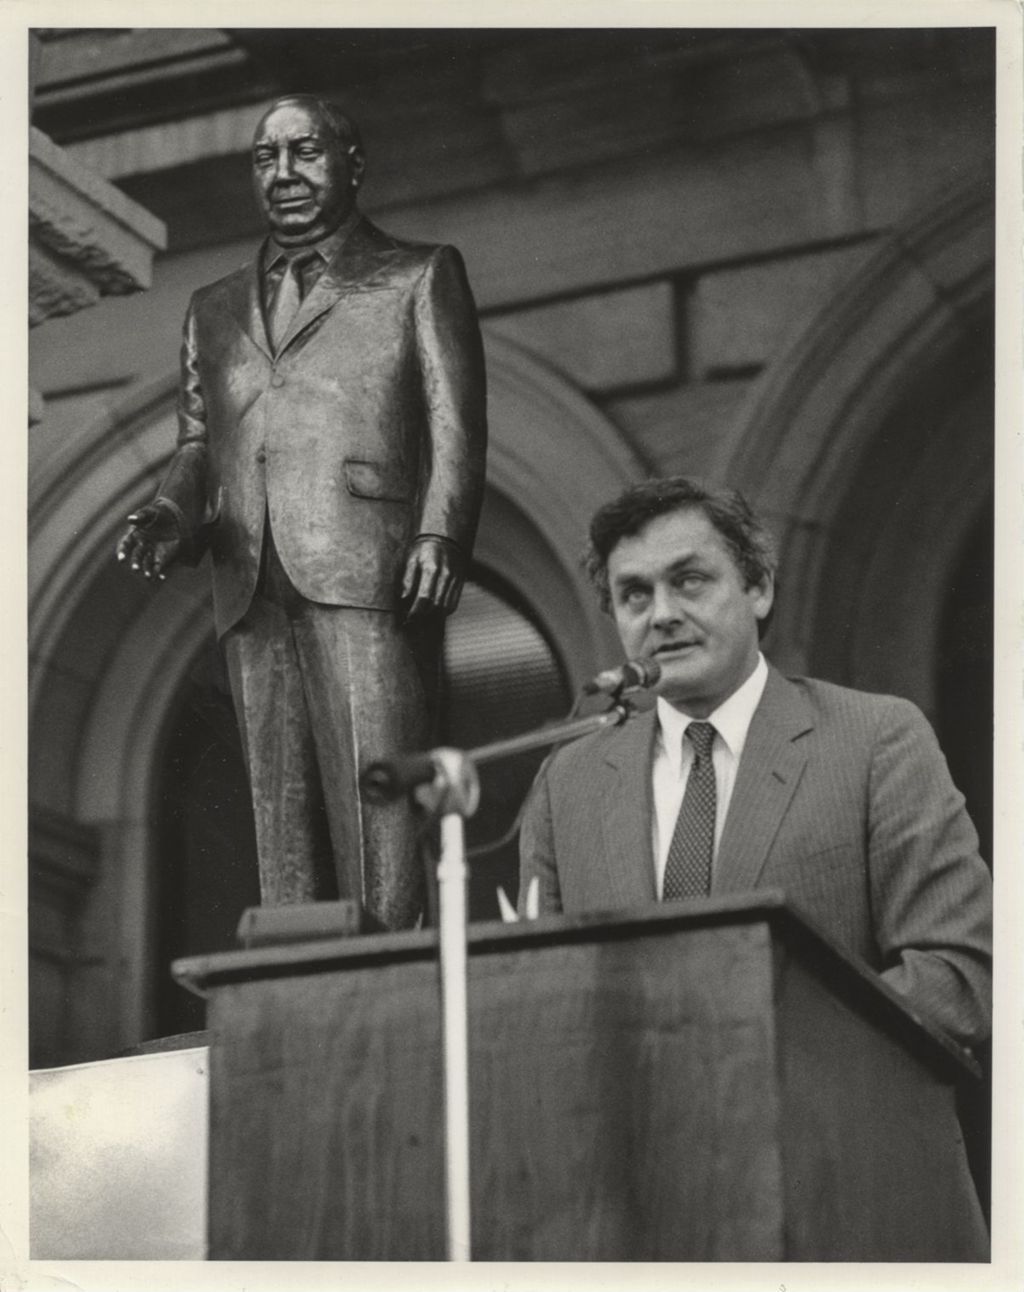 Miniature of Philip Rock speaking at the Richard J. Daley statue dedication